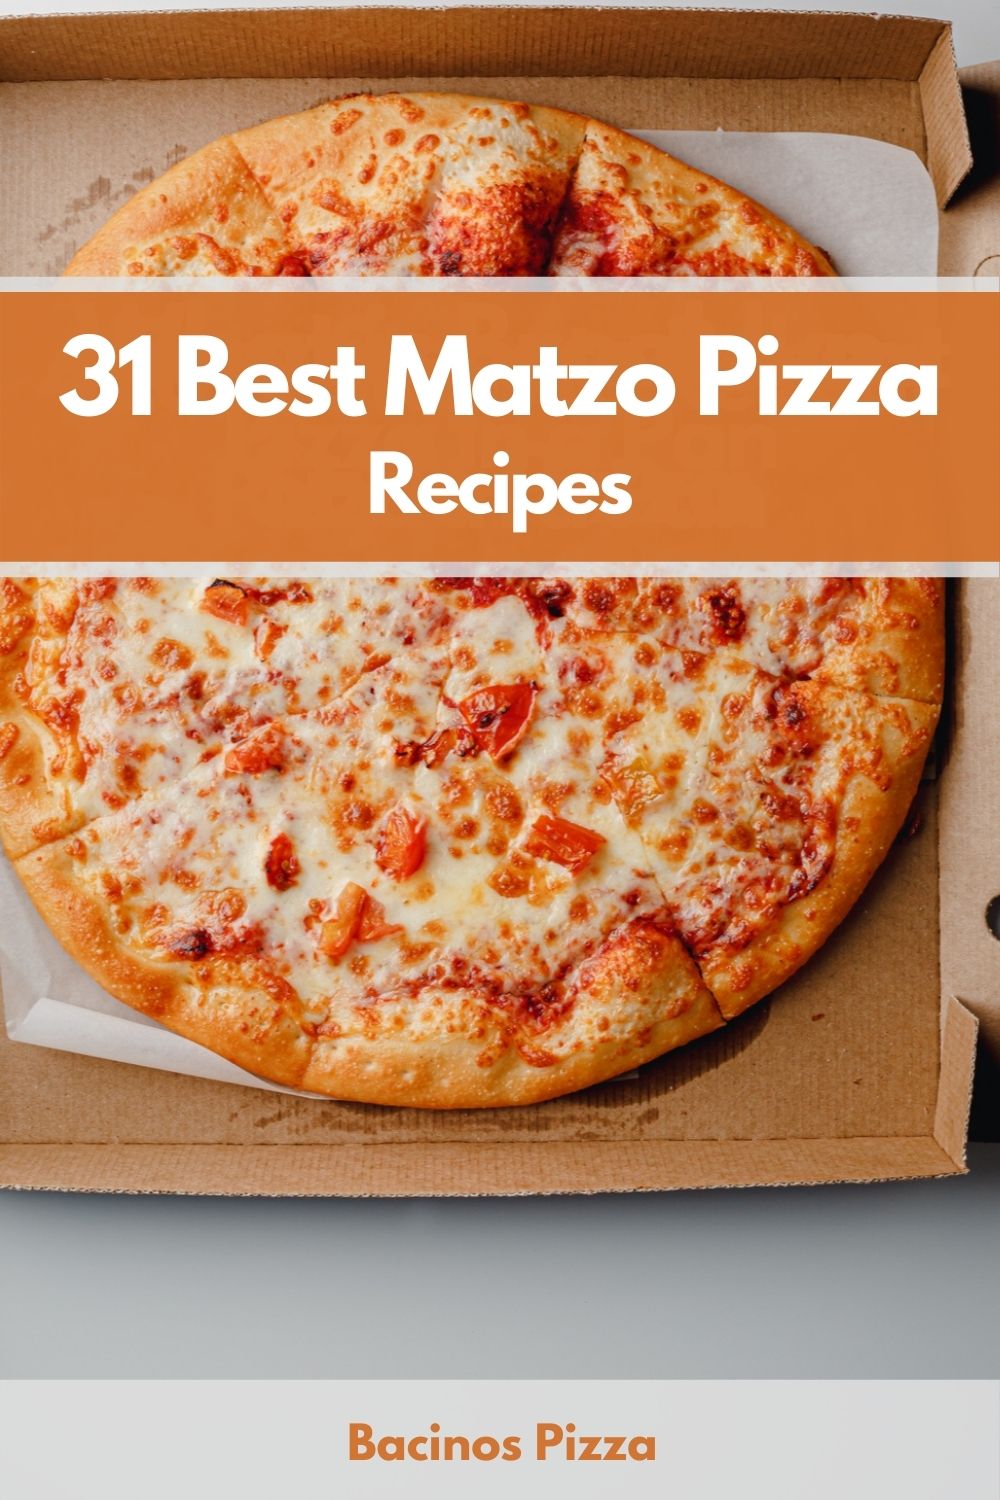 31 Best Matzo Pizza Recipes pin